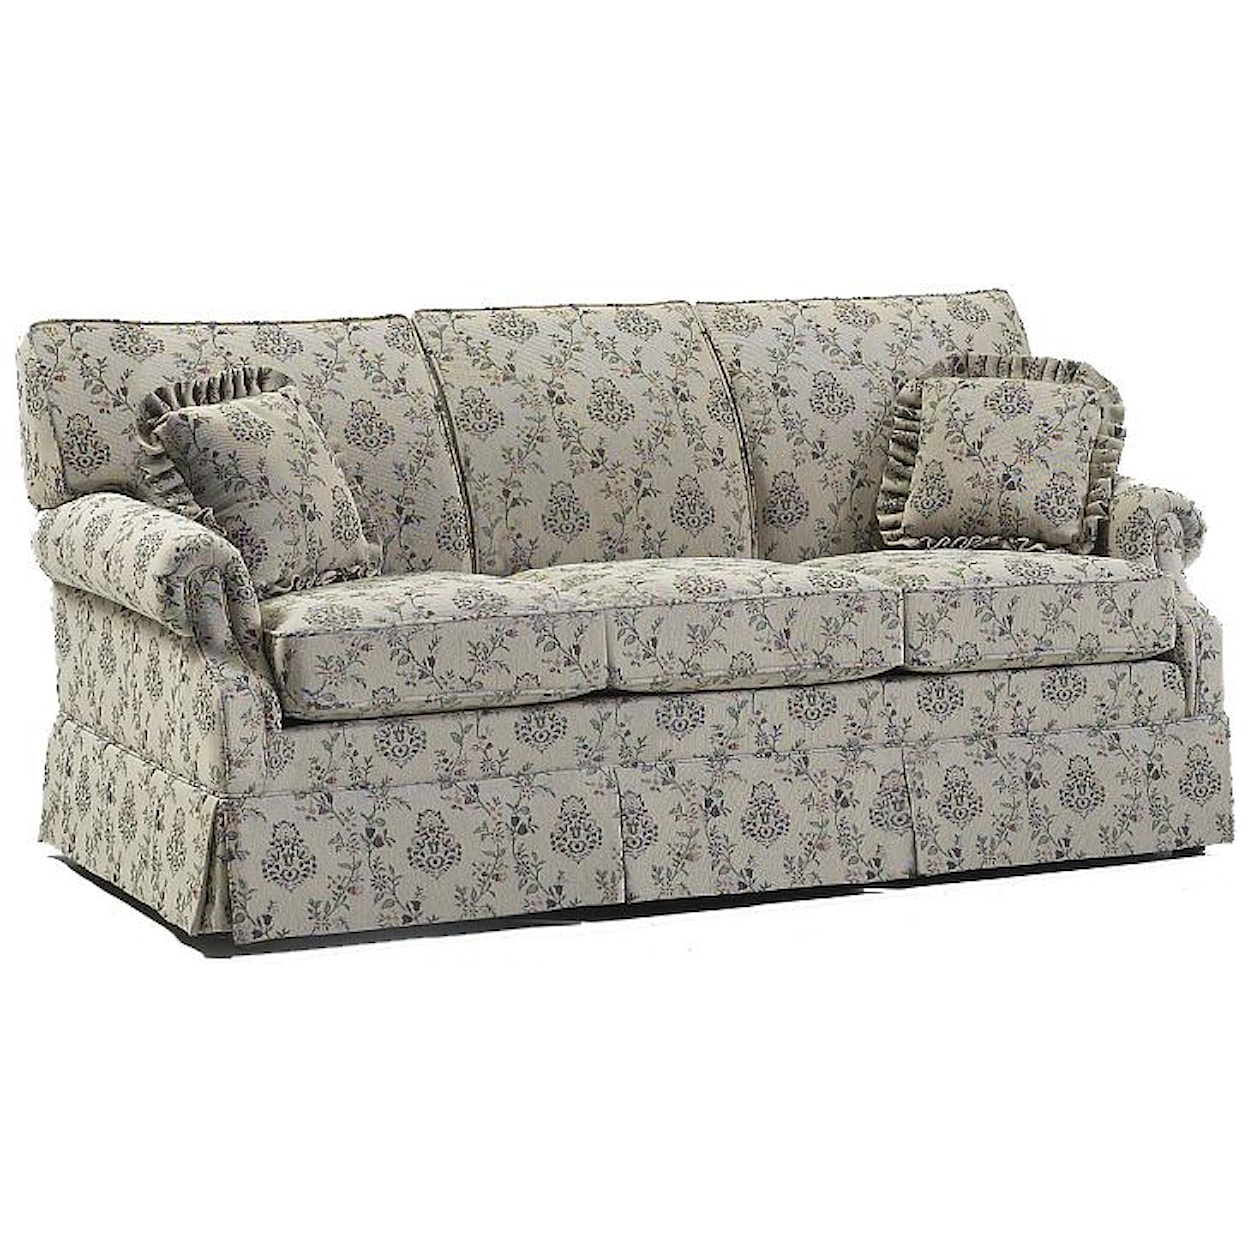 Lancer 650 Regular Length Sofa